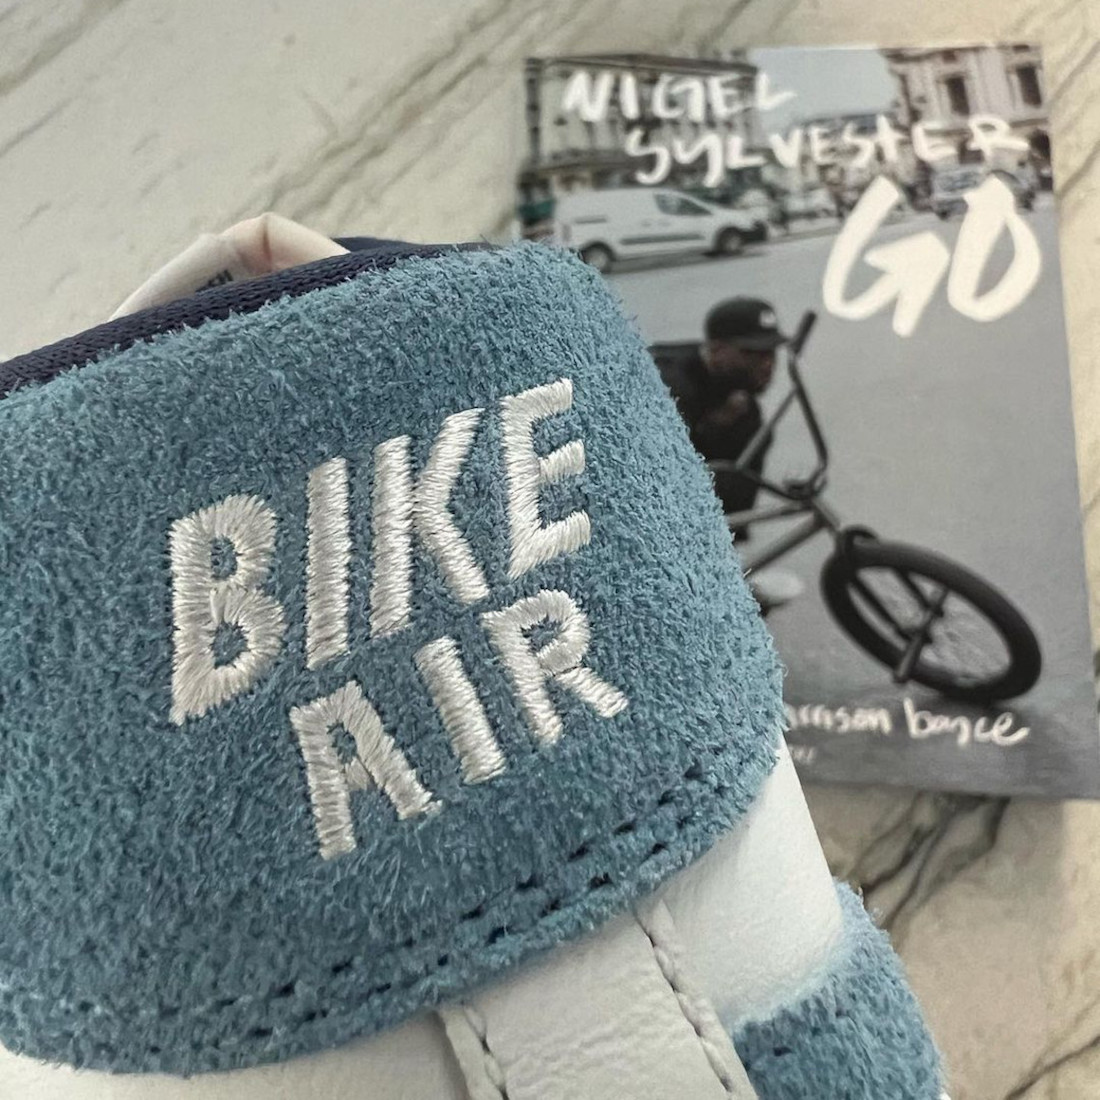 Nigel-Sylvester-Nike-Air-Ship-Bike-Air-Release-Date.jpeg